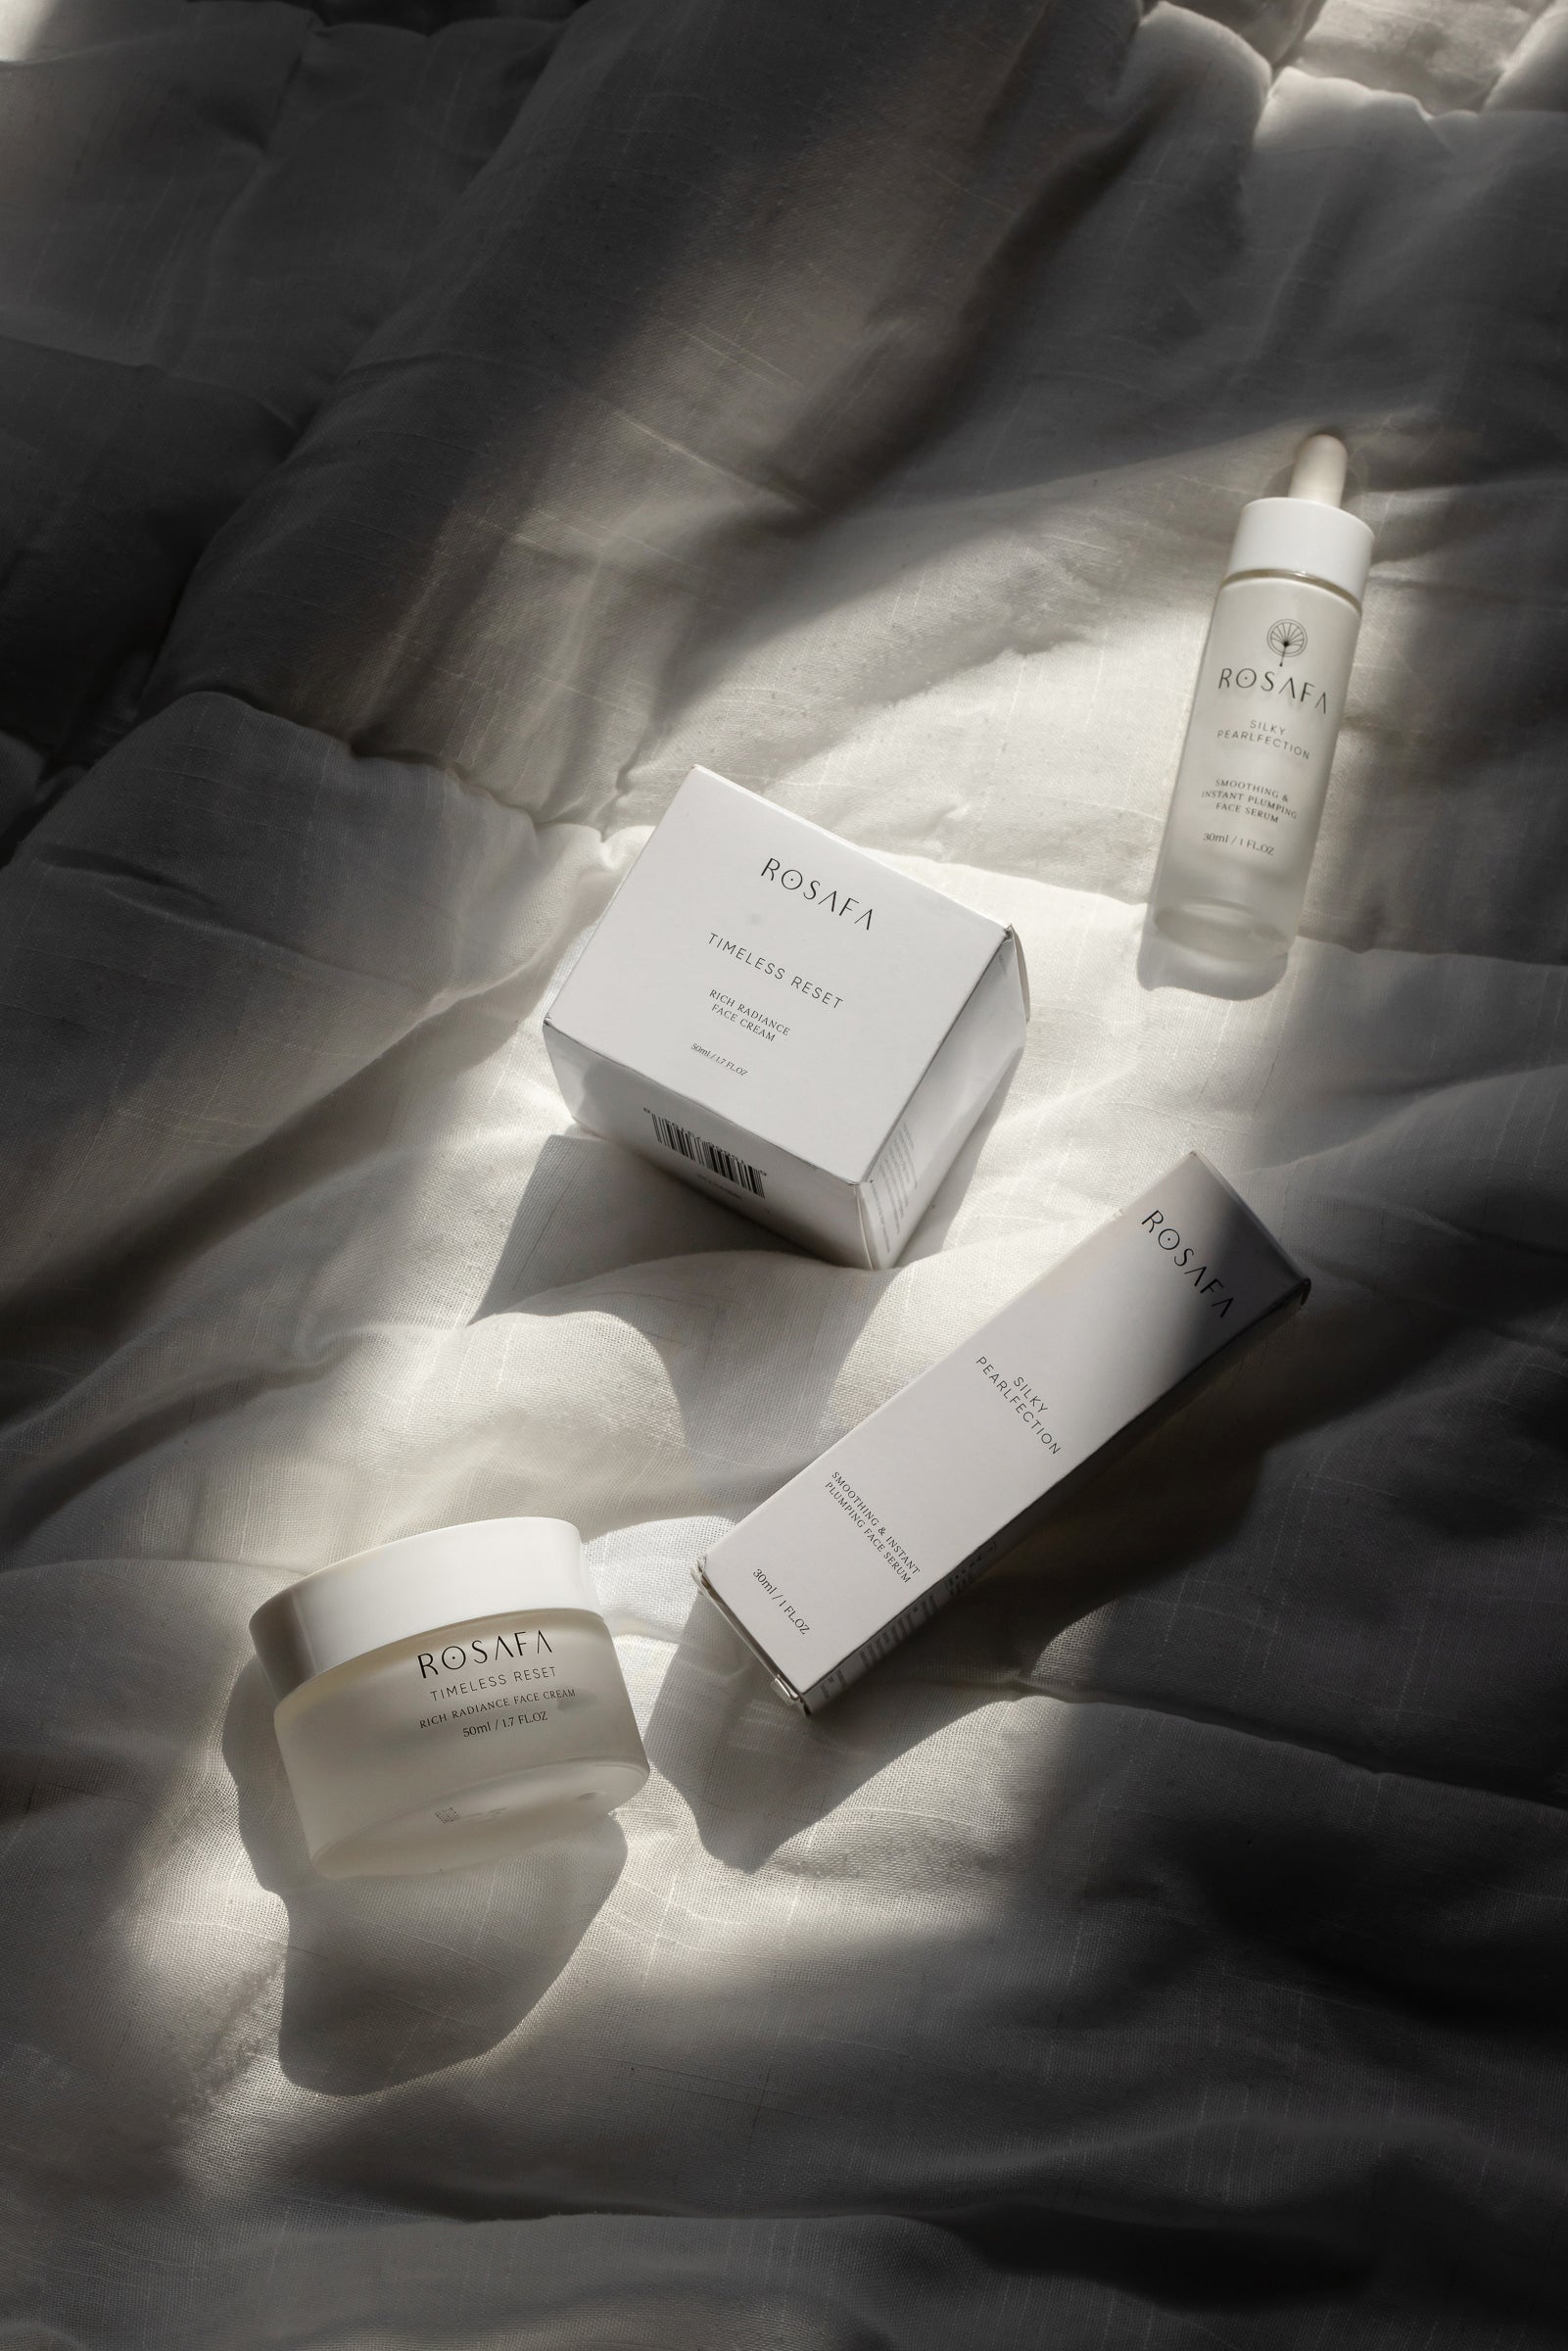 Rosafa products on the white bedsheet